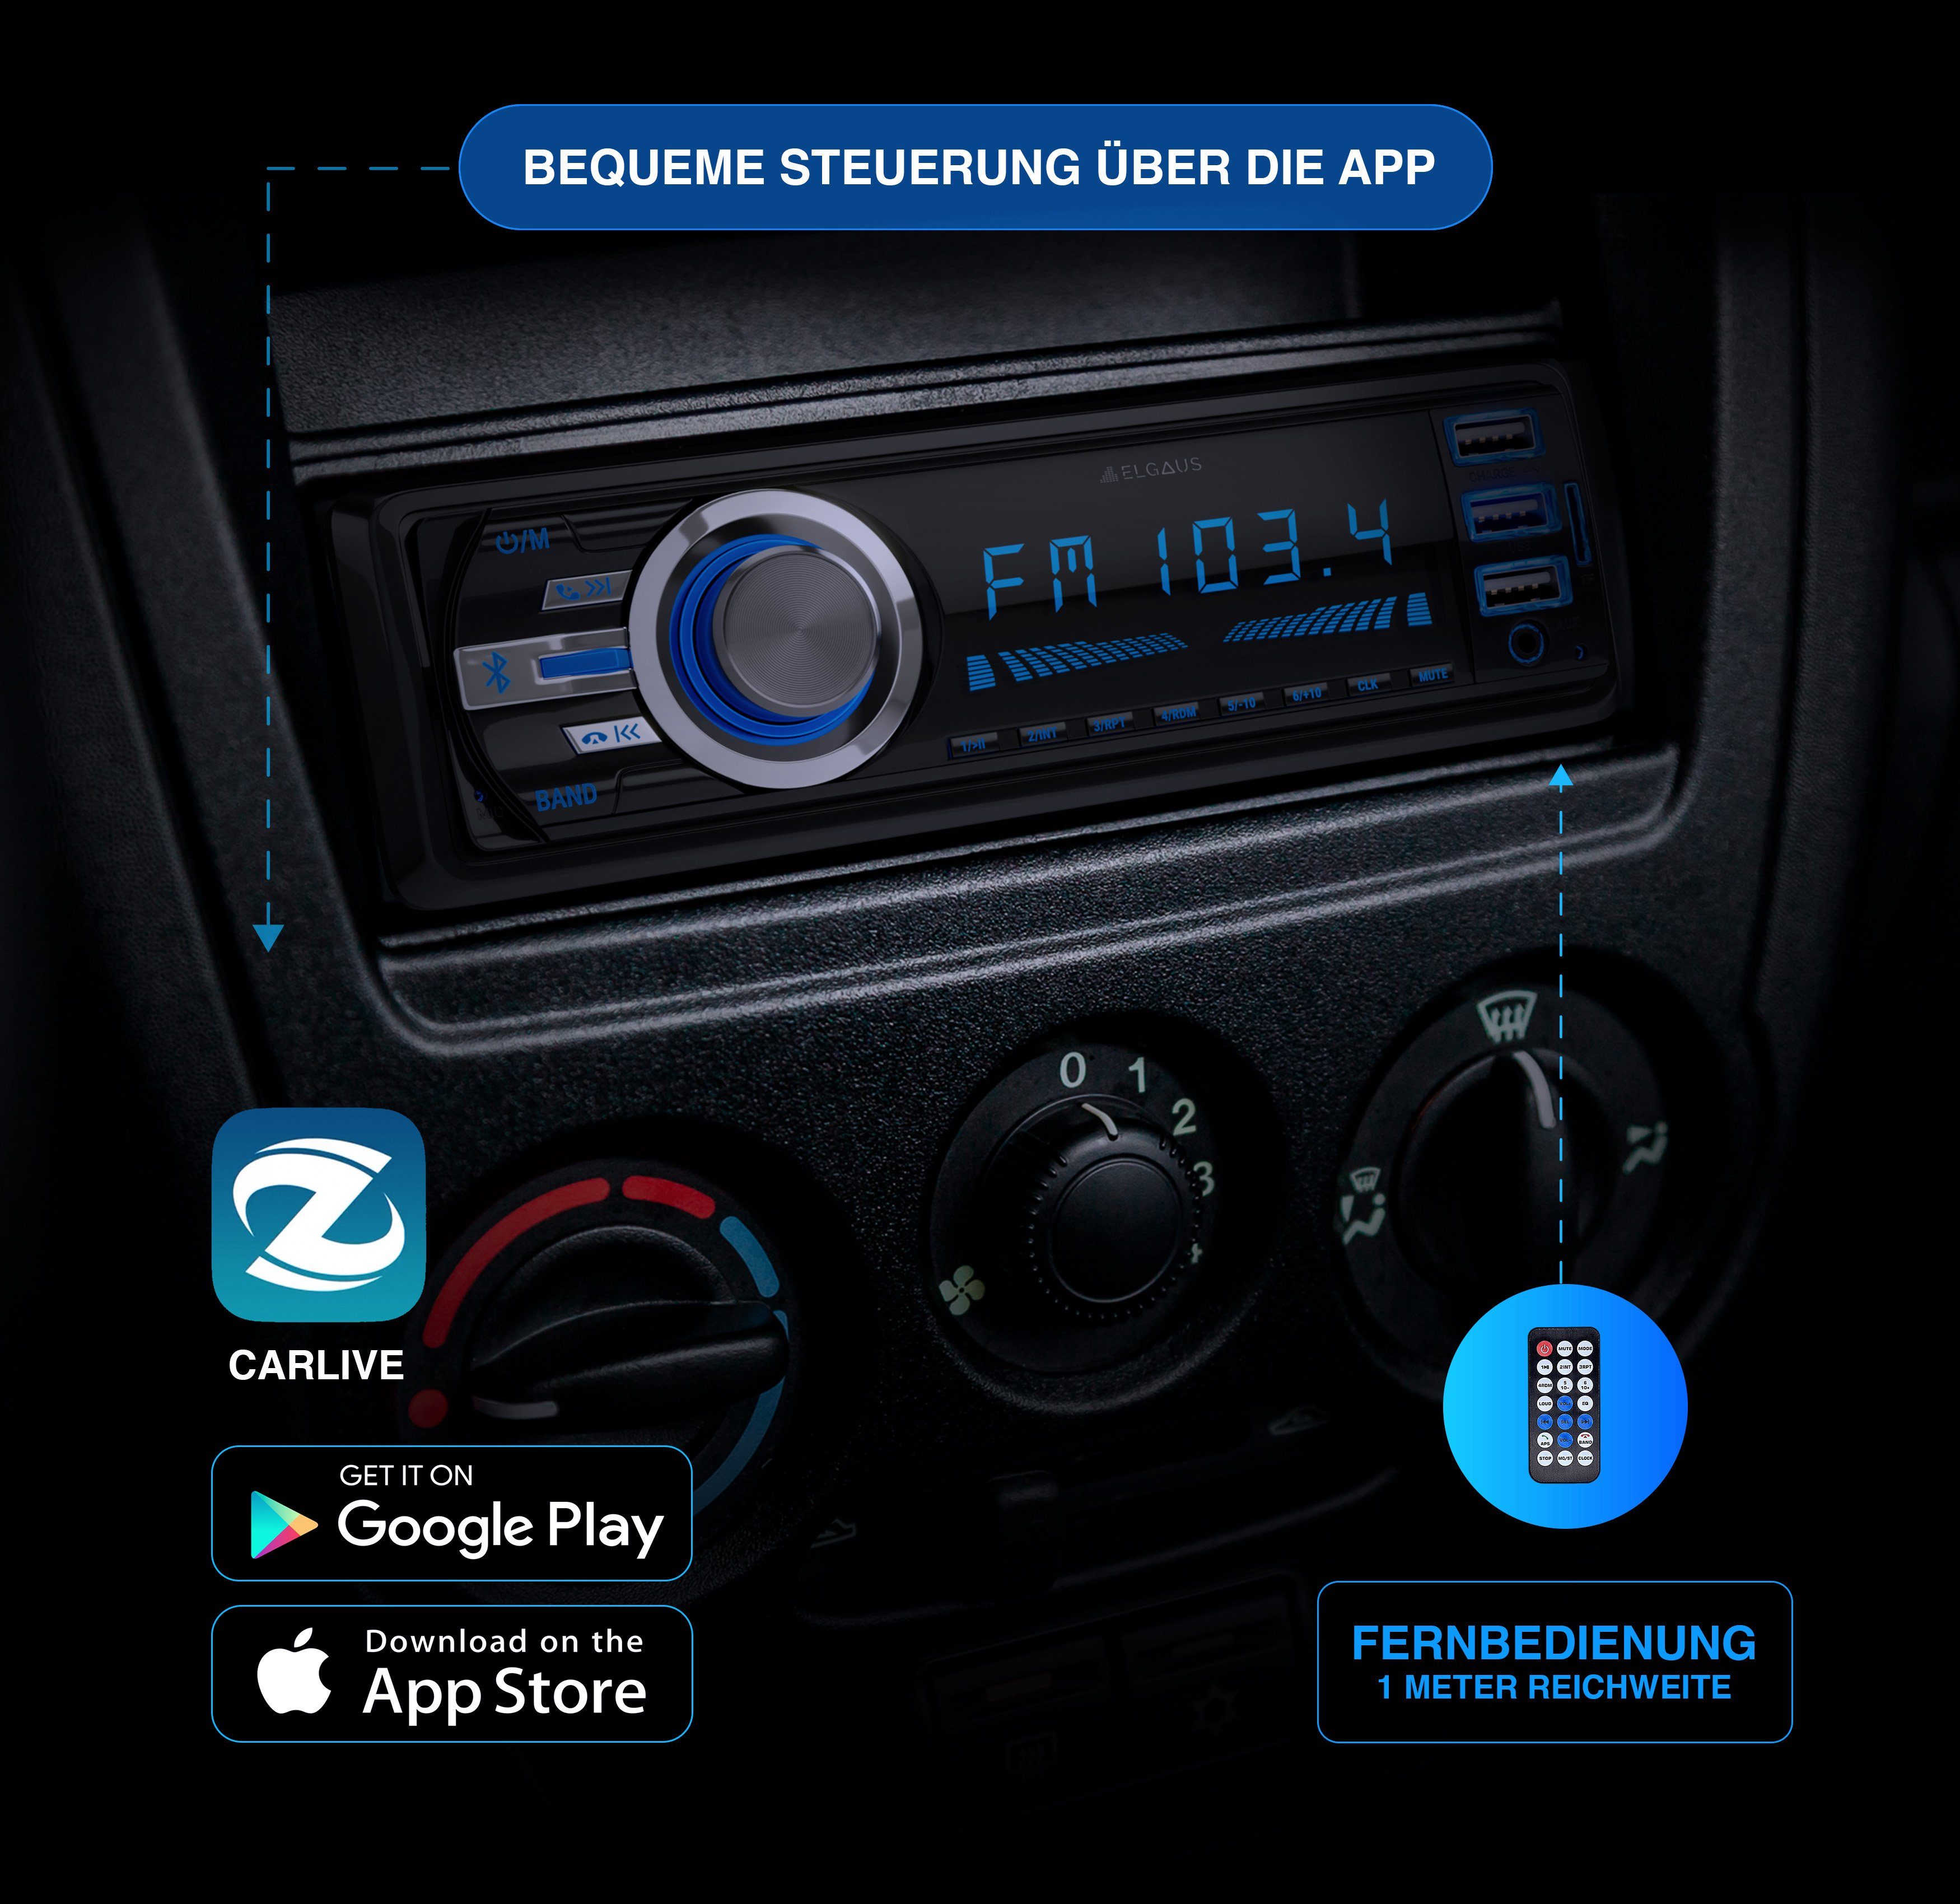 Appsteuerung, DE/EN) 1 (FM/AM, OM-180P RDS, ID3, RDS, Bluetooth, in ELGAUS Din Manual Fernbedienung, Autoradio